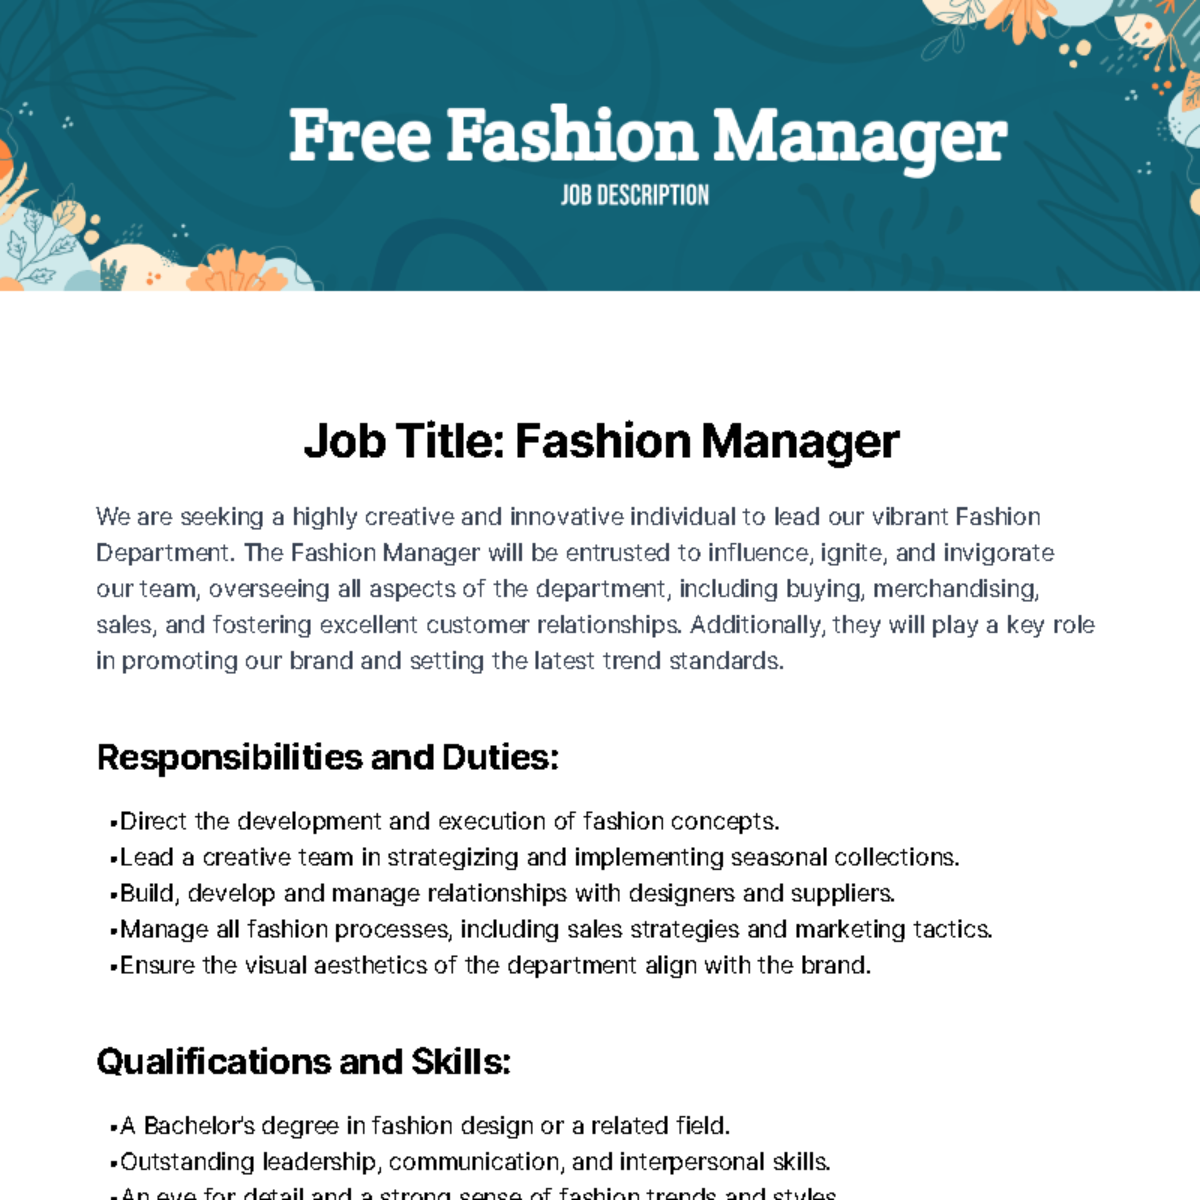 Free Fashion Manager Job Description Template